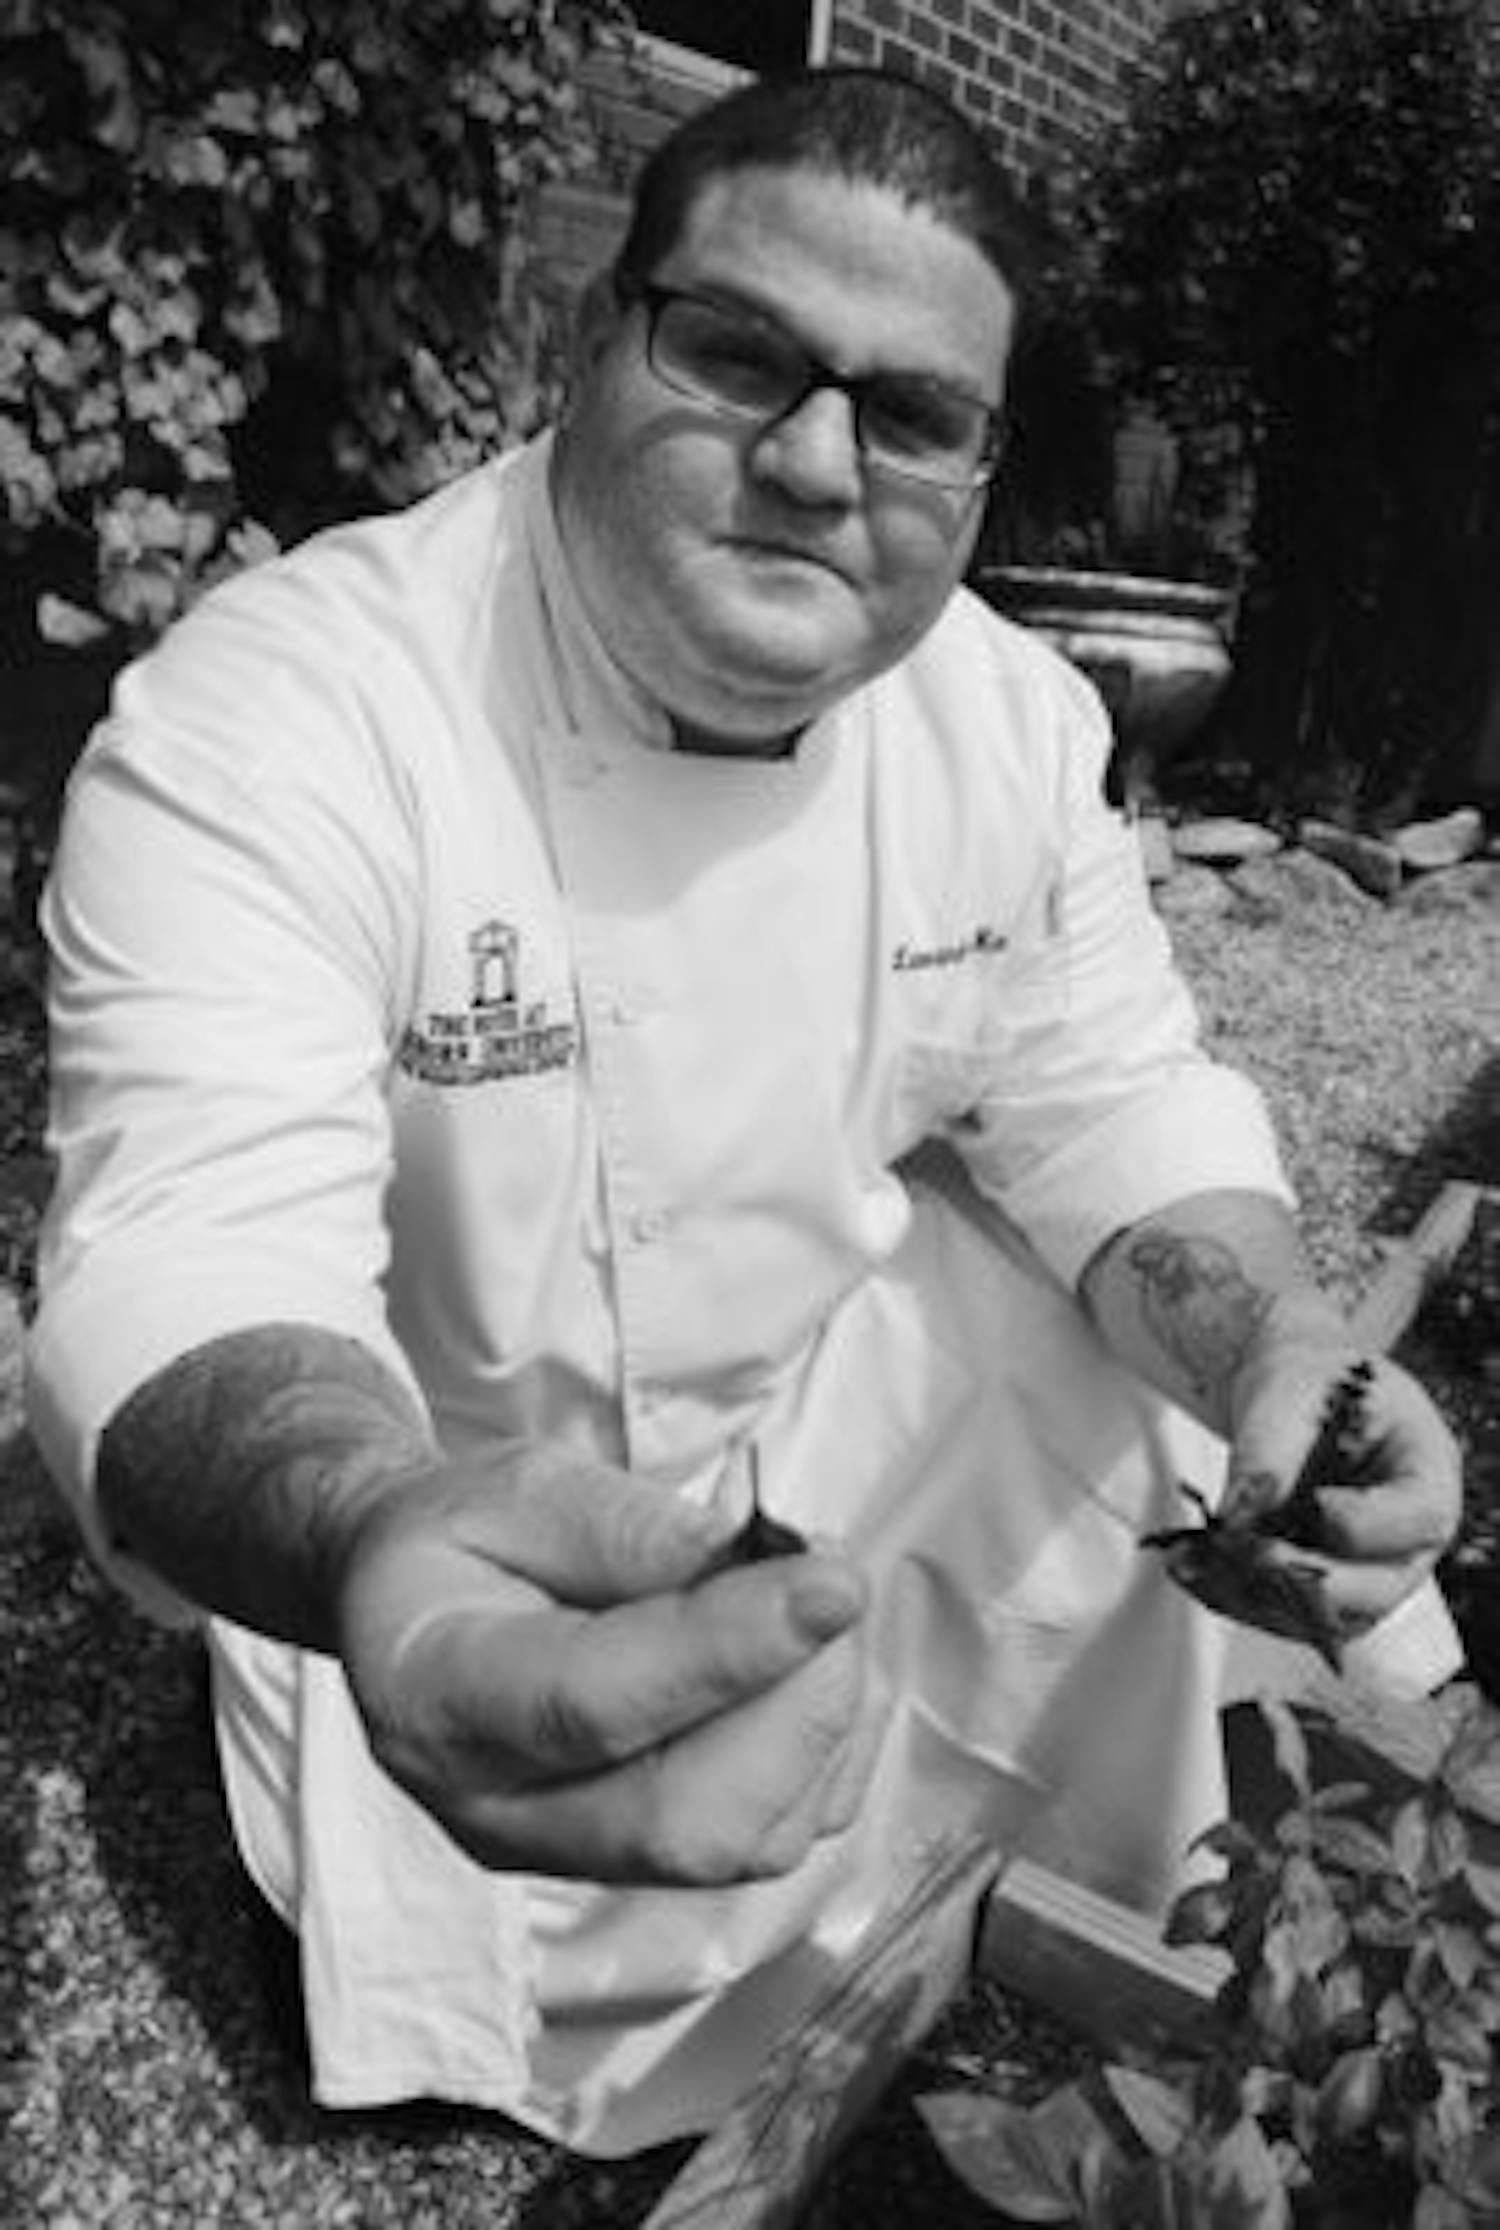 Leonardo Maurelli, chef at Ariccia, will use fresh herbs from a garden at the Auburn Hotel and Dixon Conference Center to prepare dishes for Oktoberfest. (Maria Iampietro / PHOTO EDITOR)